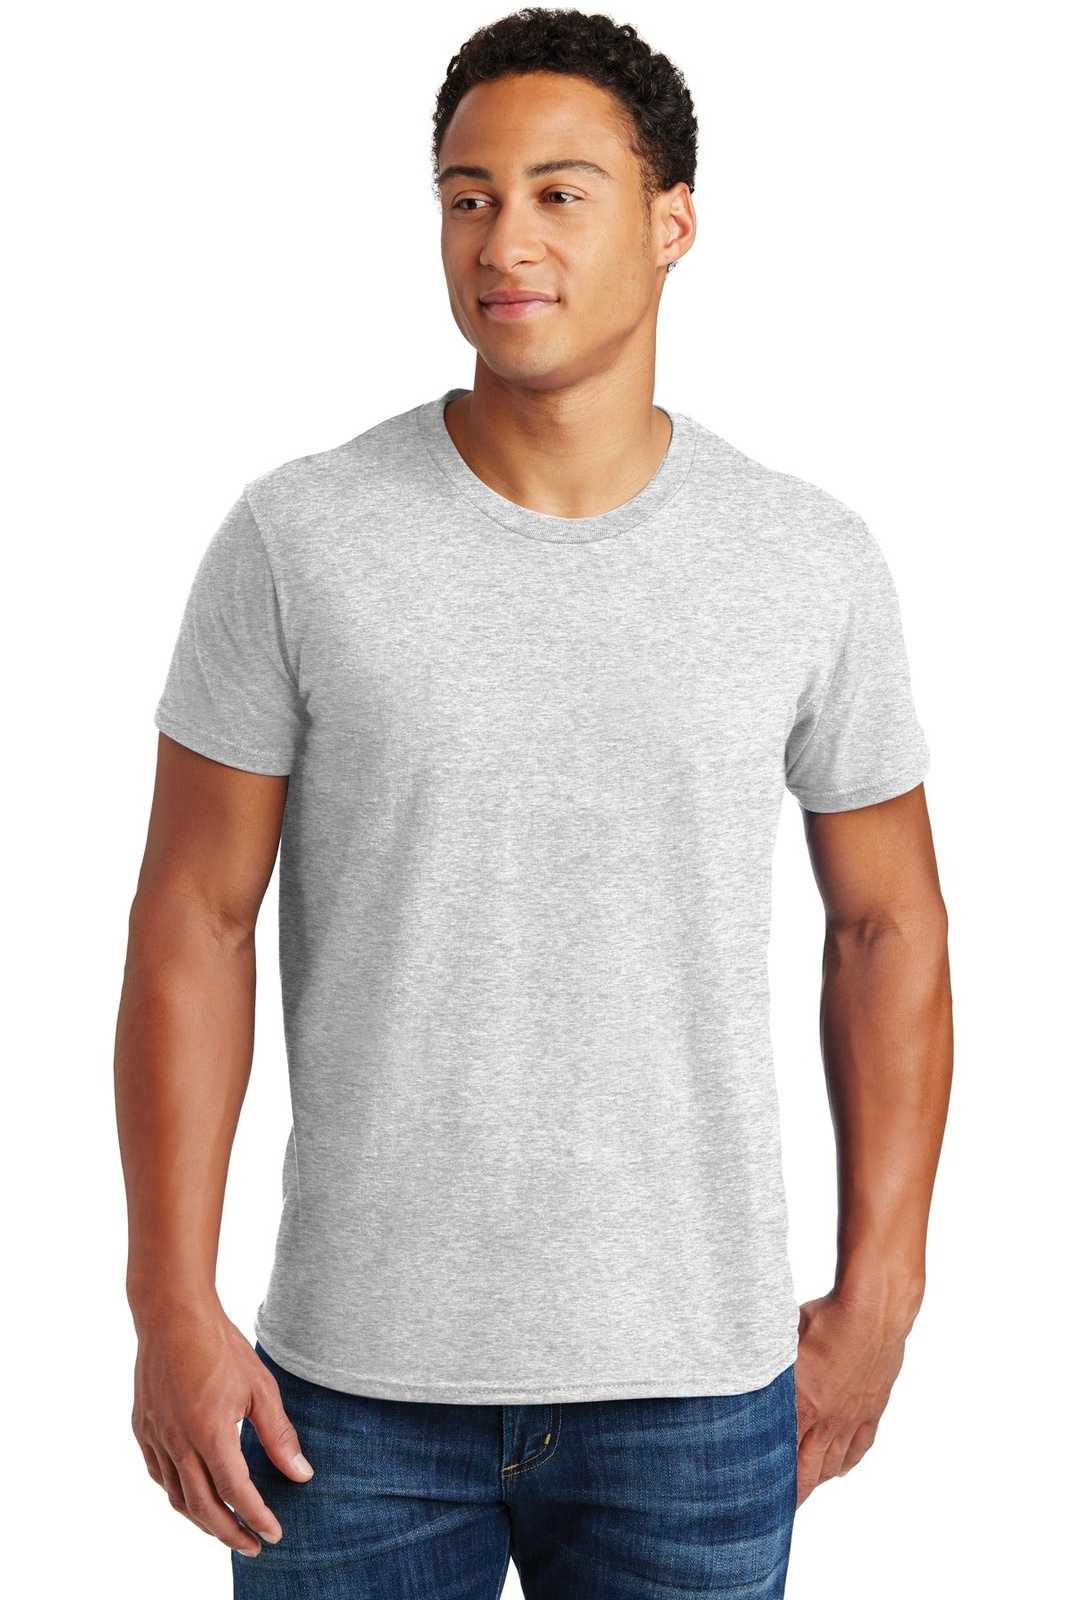 Hanes 4980 Nano-T Cotton T-Shirt - Ash - HIT a Double